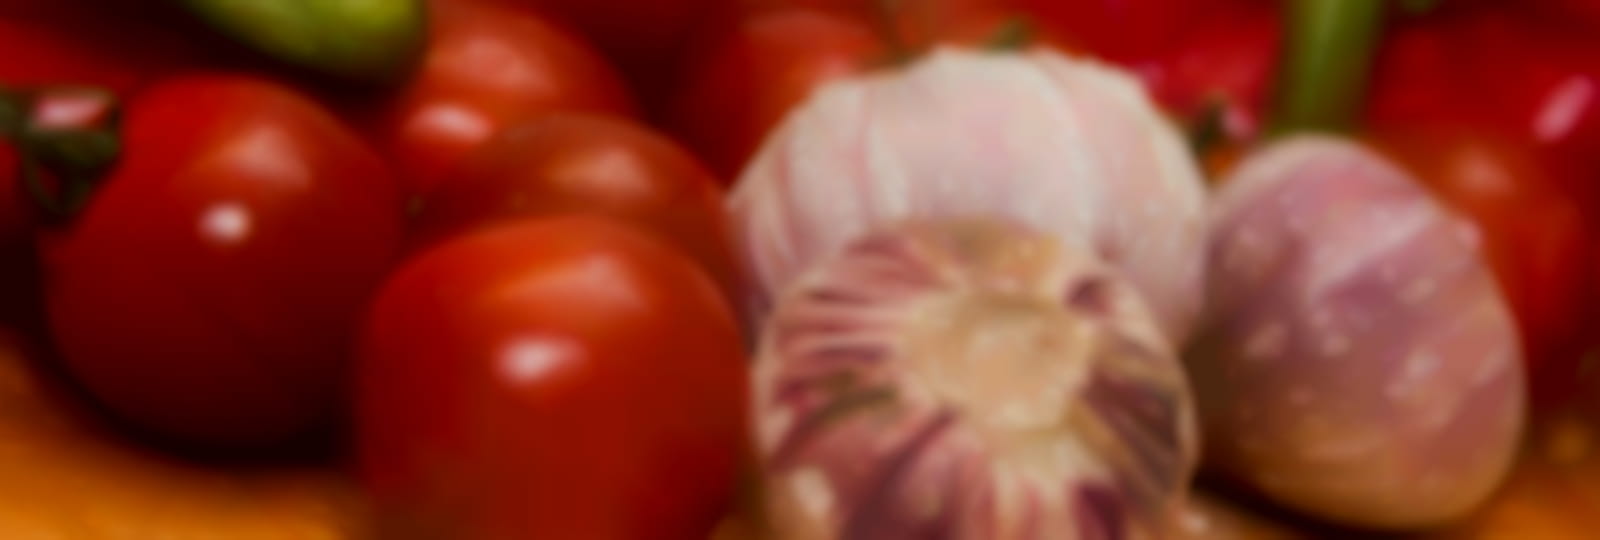 tomatoes-417104_960_720